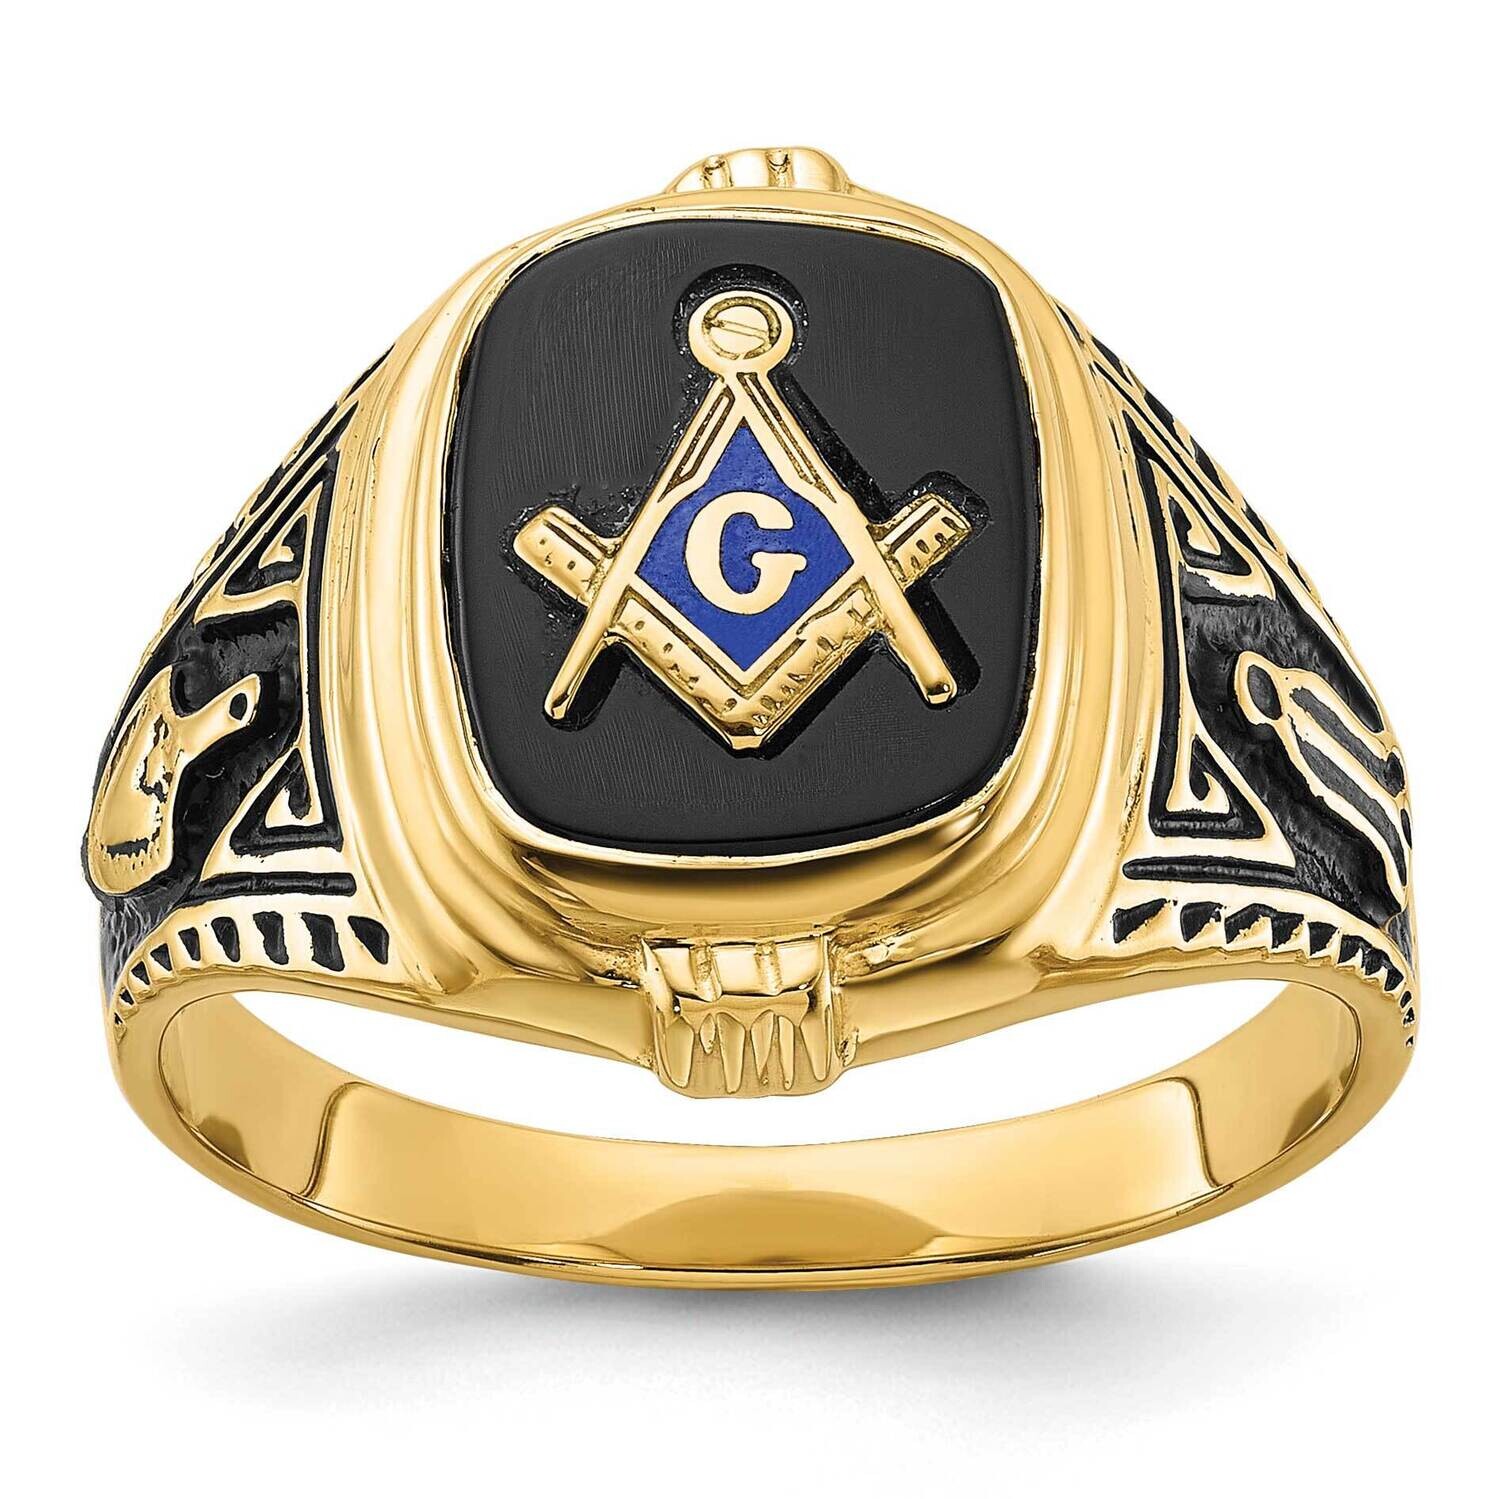 Men's Polished Antiqued Textured Onyx Masonic Ring 10k Gold 10Y4078M